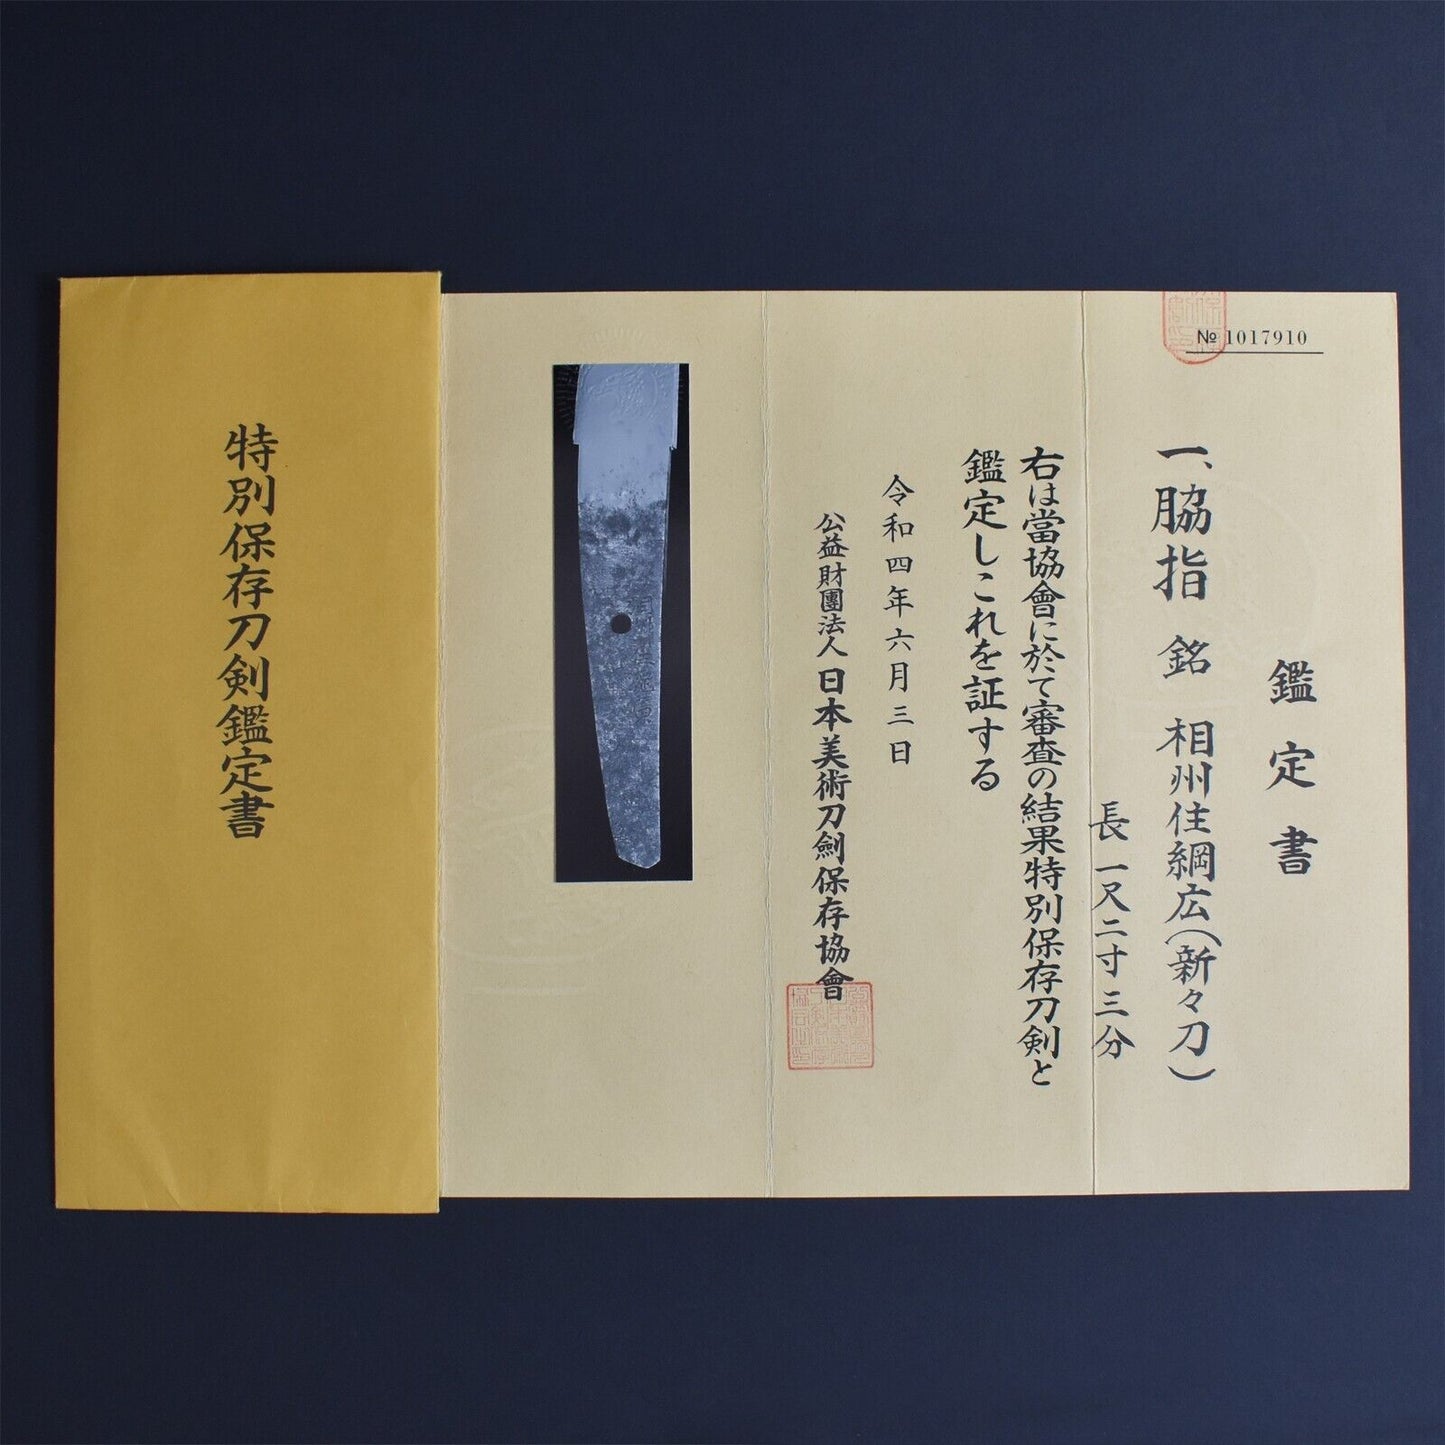 Original Antique Japanese Wakizashi Sword Signed Samurai Blade Collectible Tamahagane Weapon Edo Era.